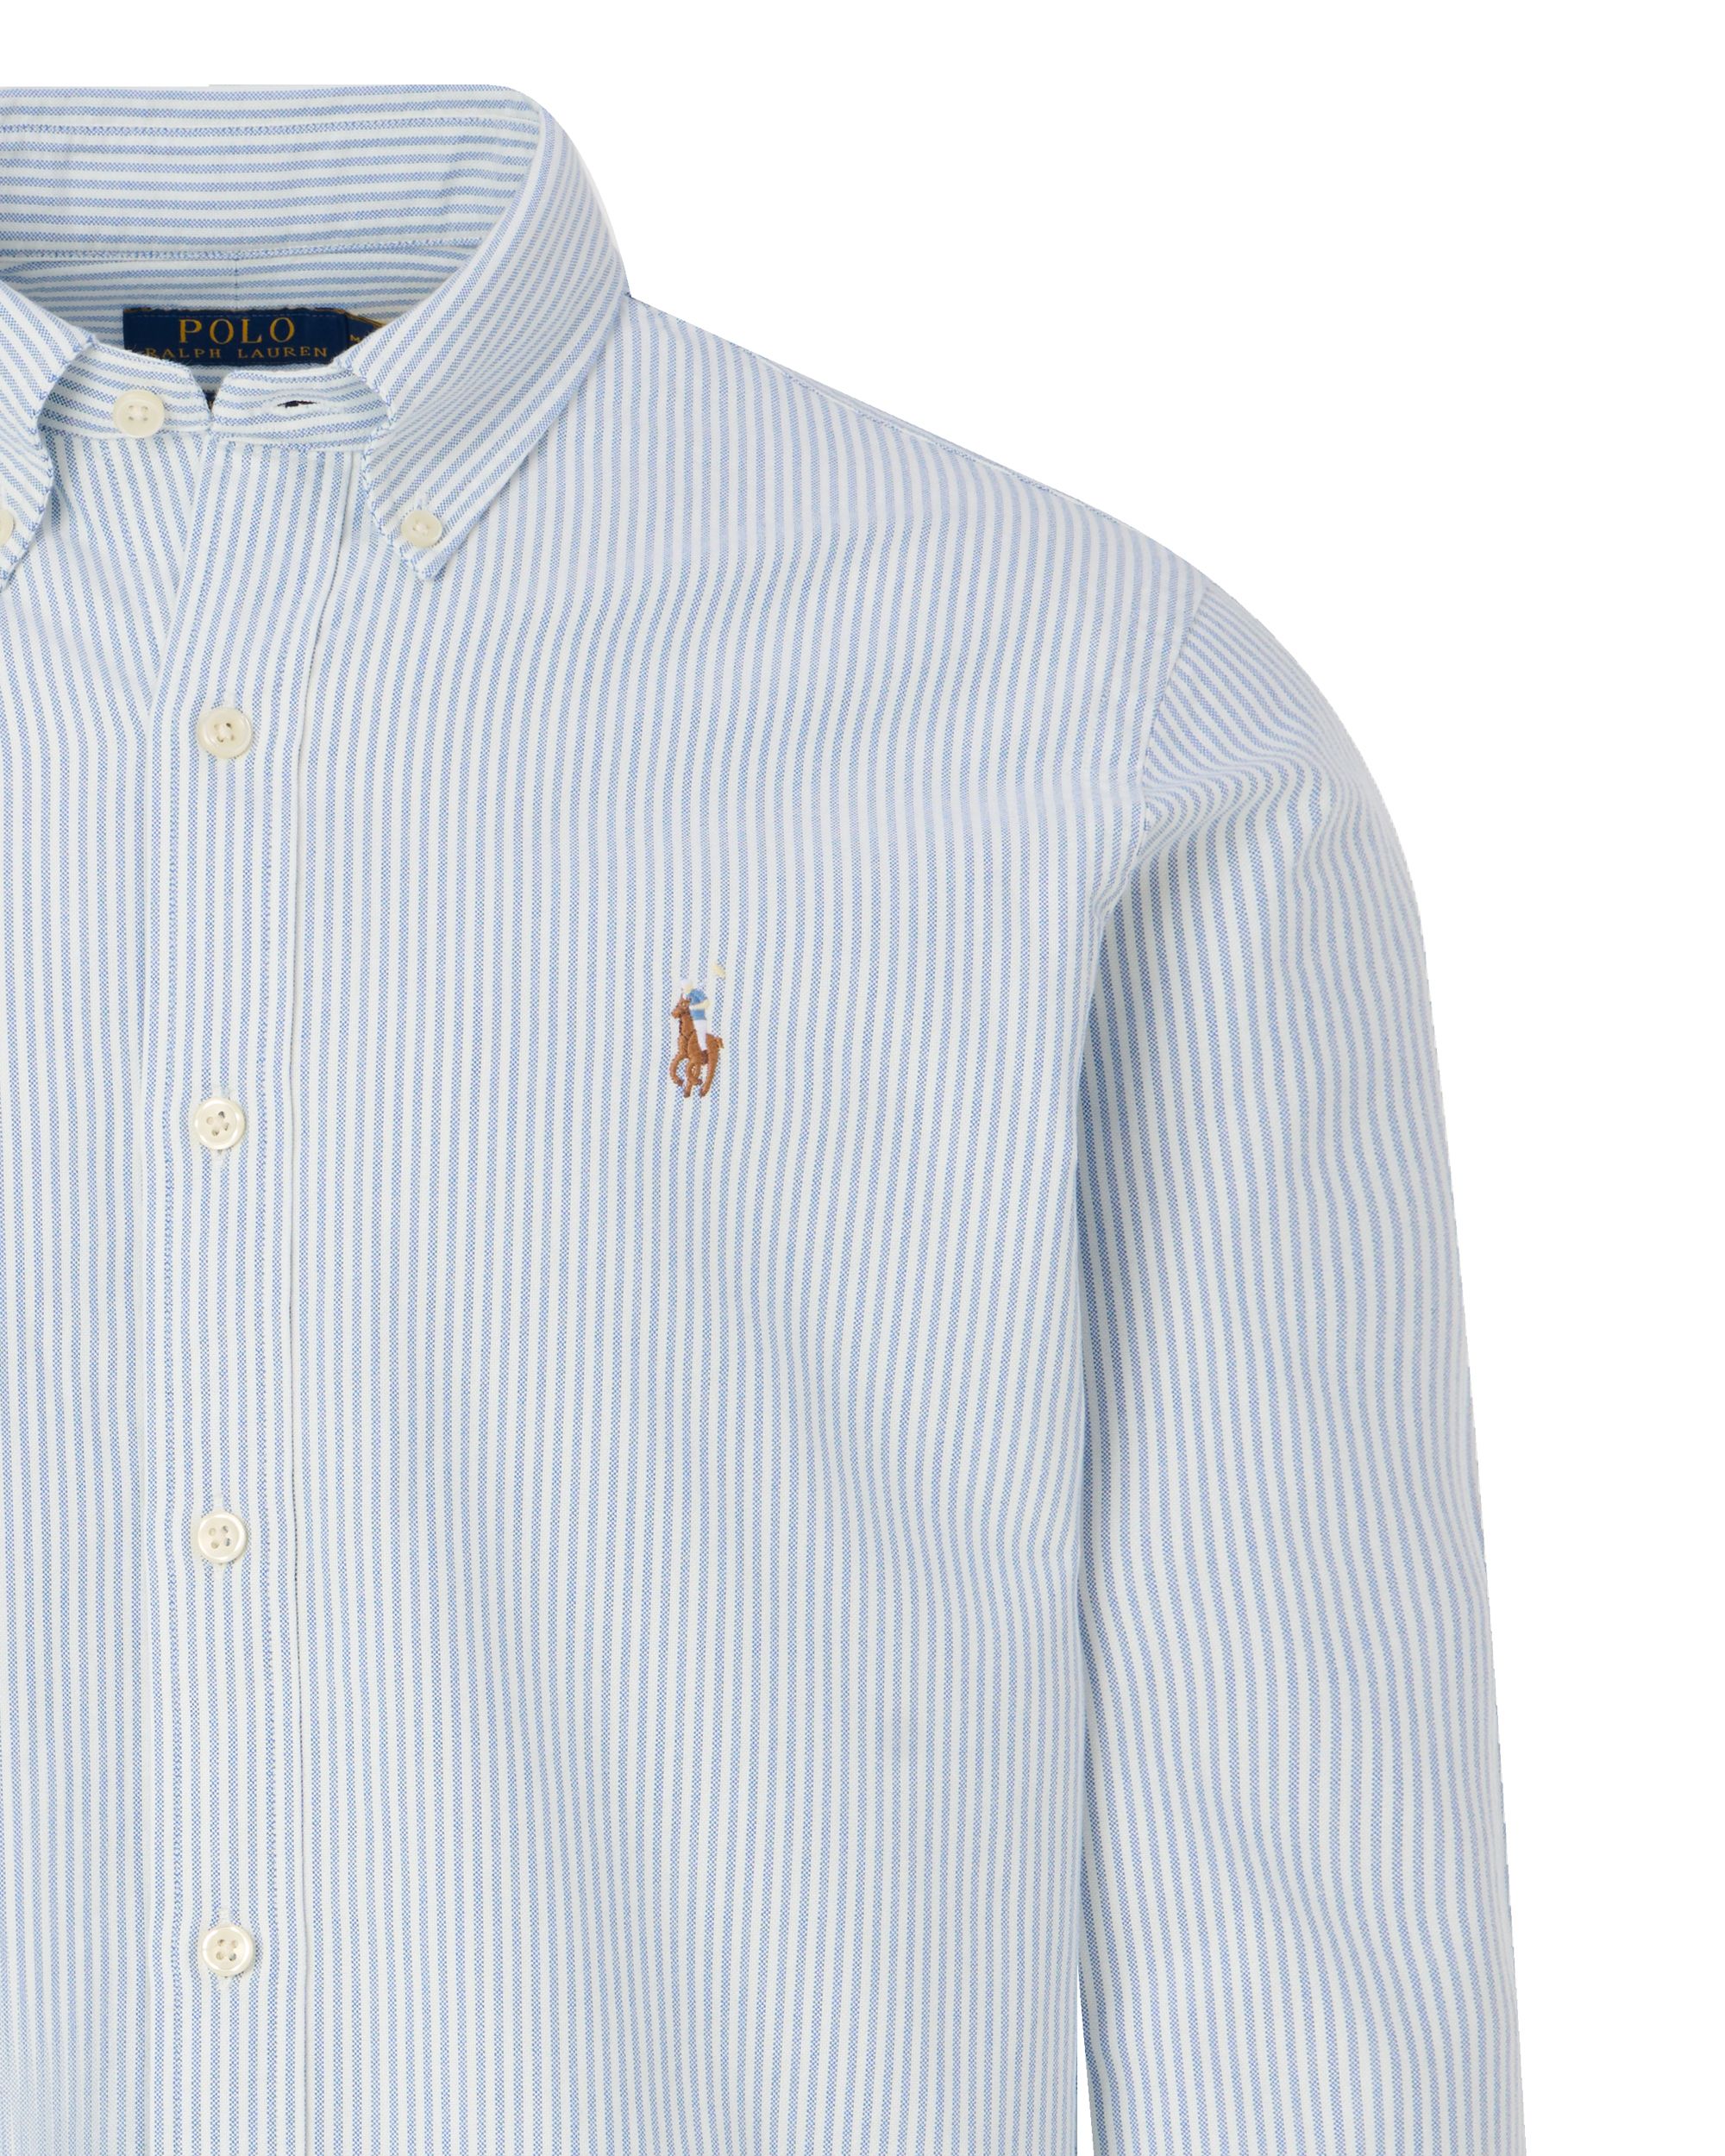 Polo Ralph Lauren Casual Overhemd LM Blauw streep 086677-001-L